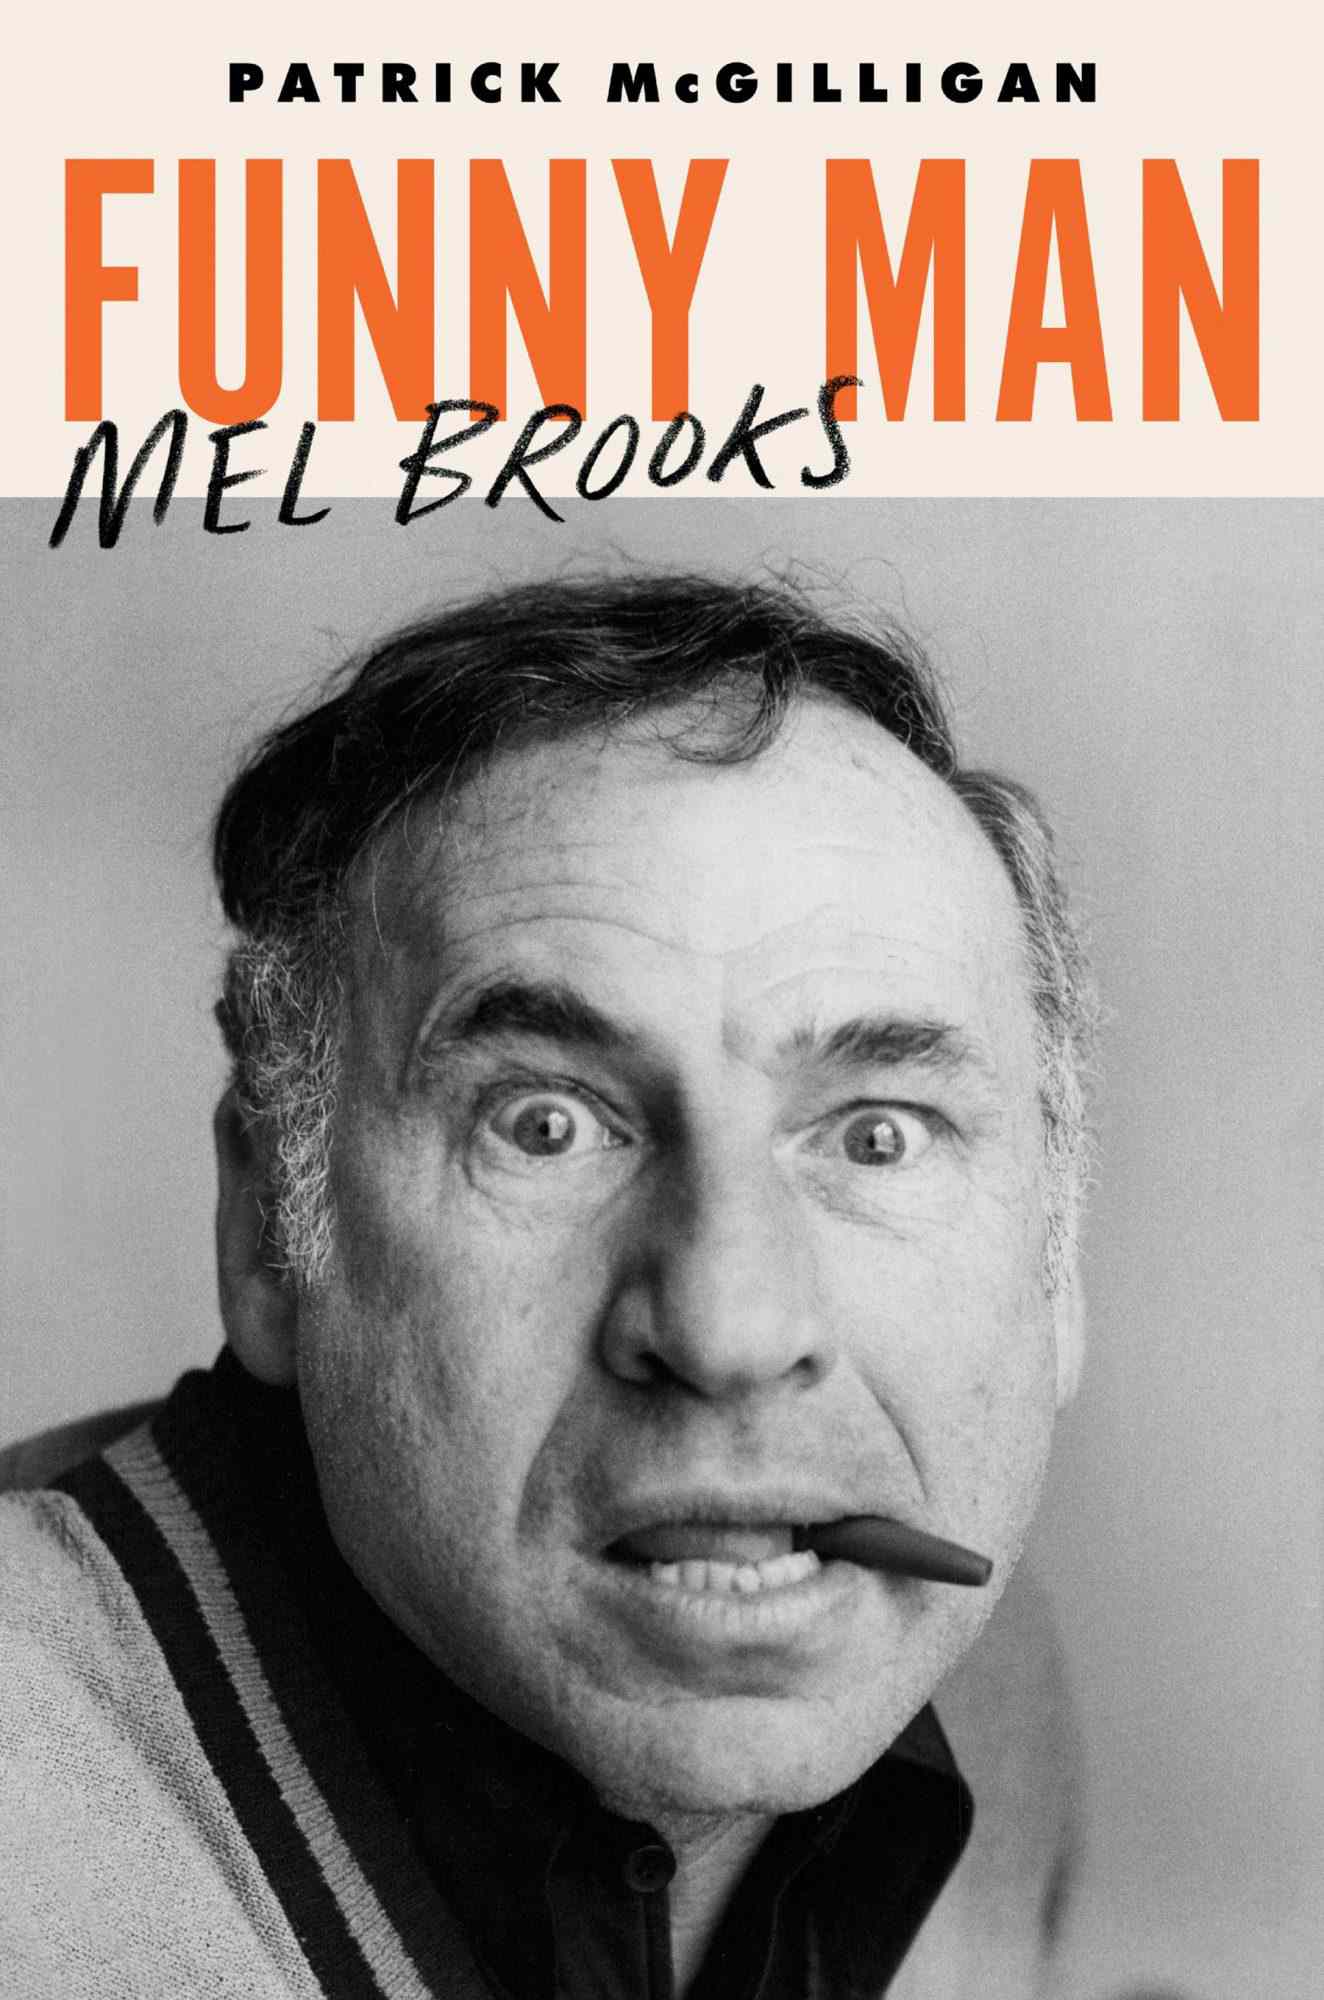 Funny Man: Mel Brooks by Patrick McGillanPublisher: Harper